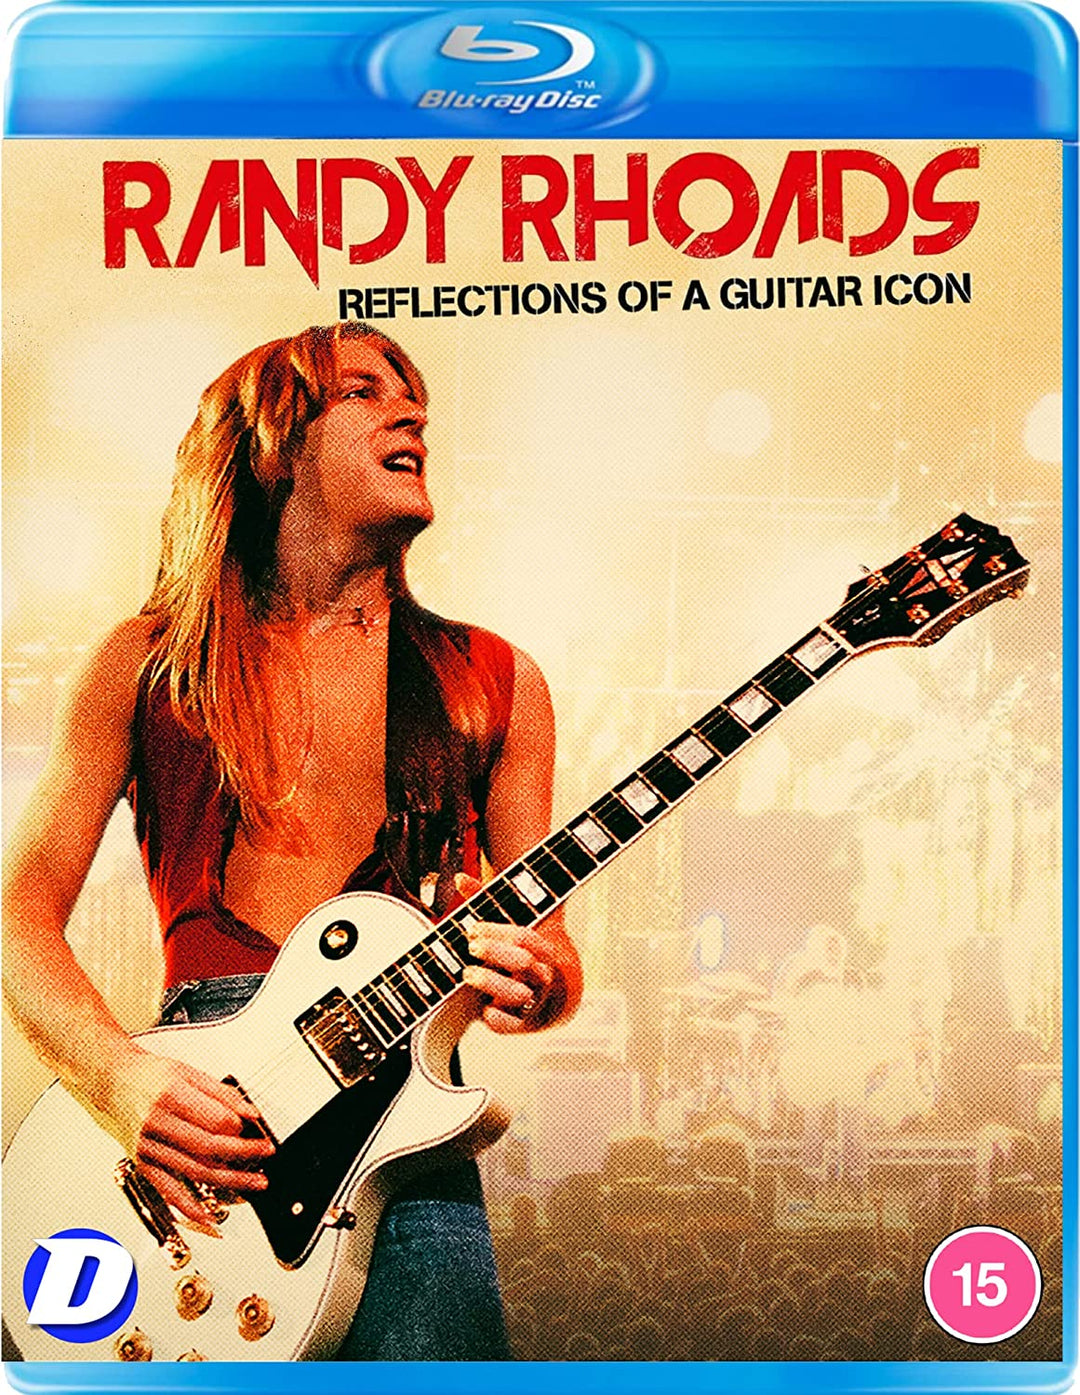 Randy Rhoads – Reflections of a Guitar Icon [Blu-ray]